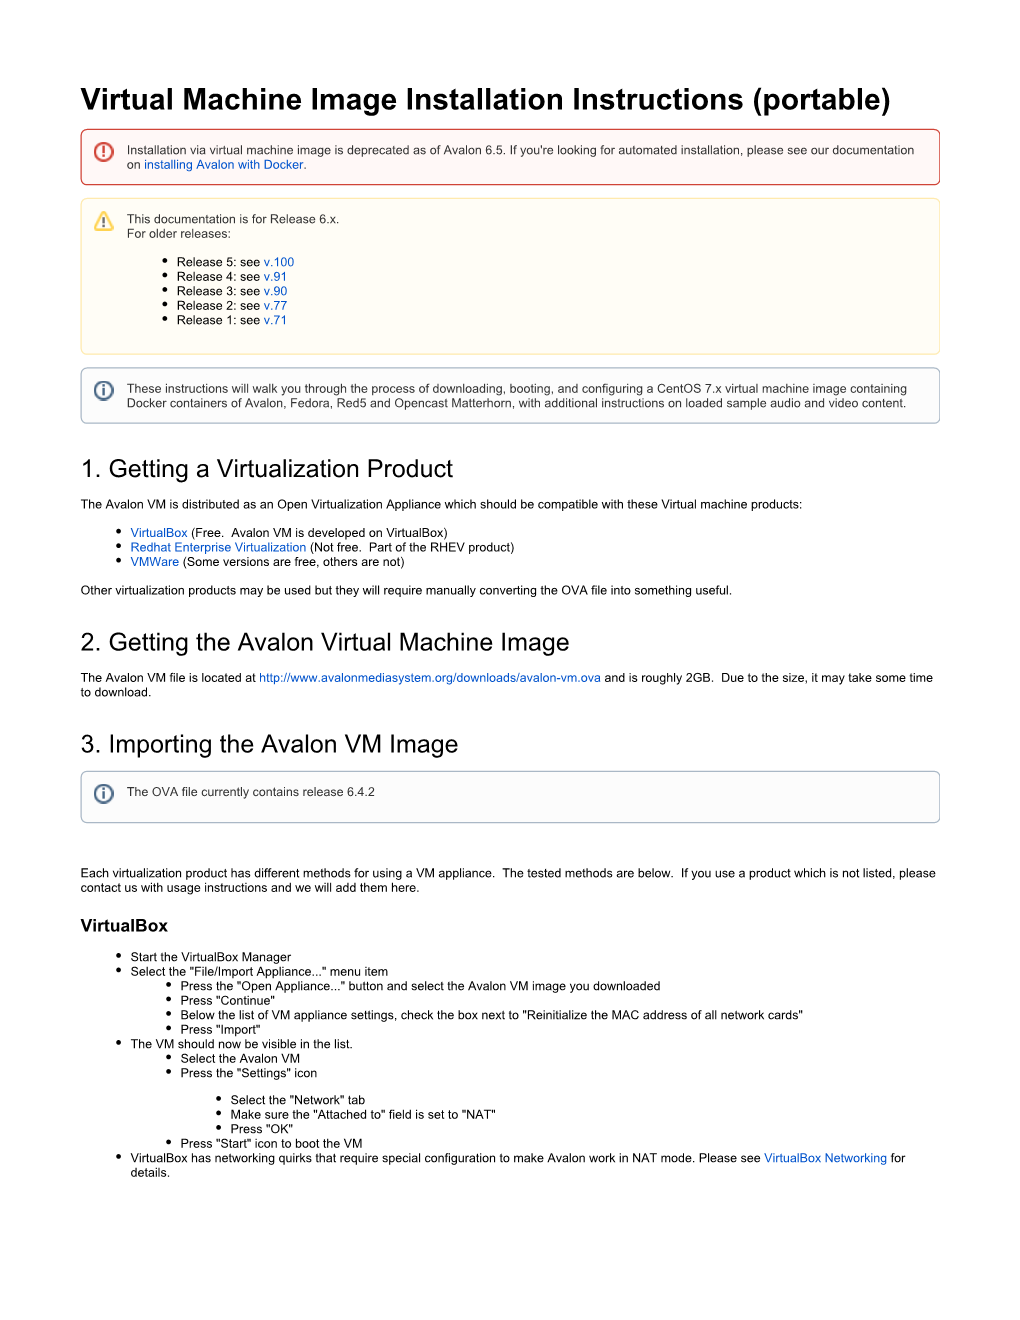 Virtual Machine Image Installation Instructions (Portable)